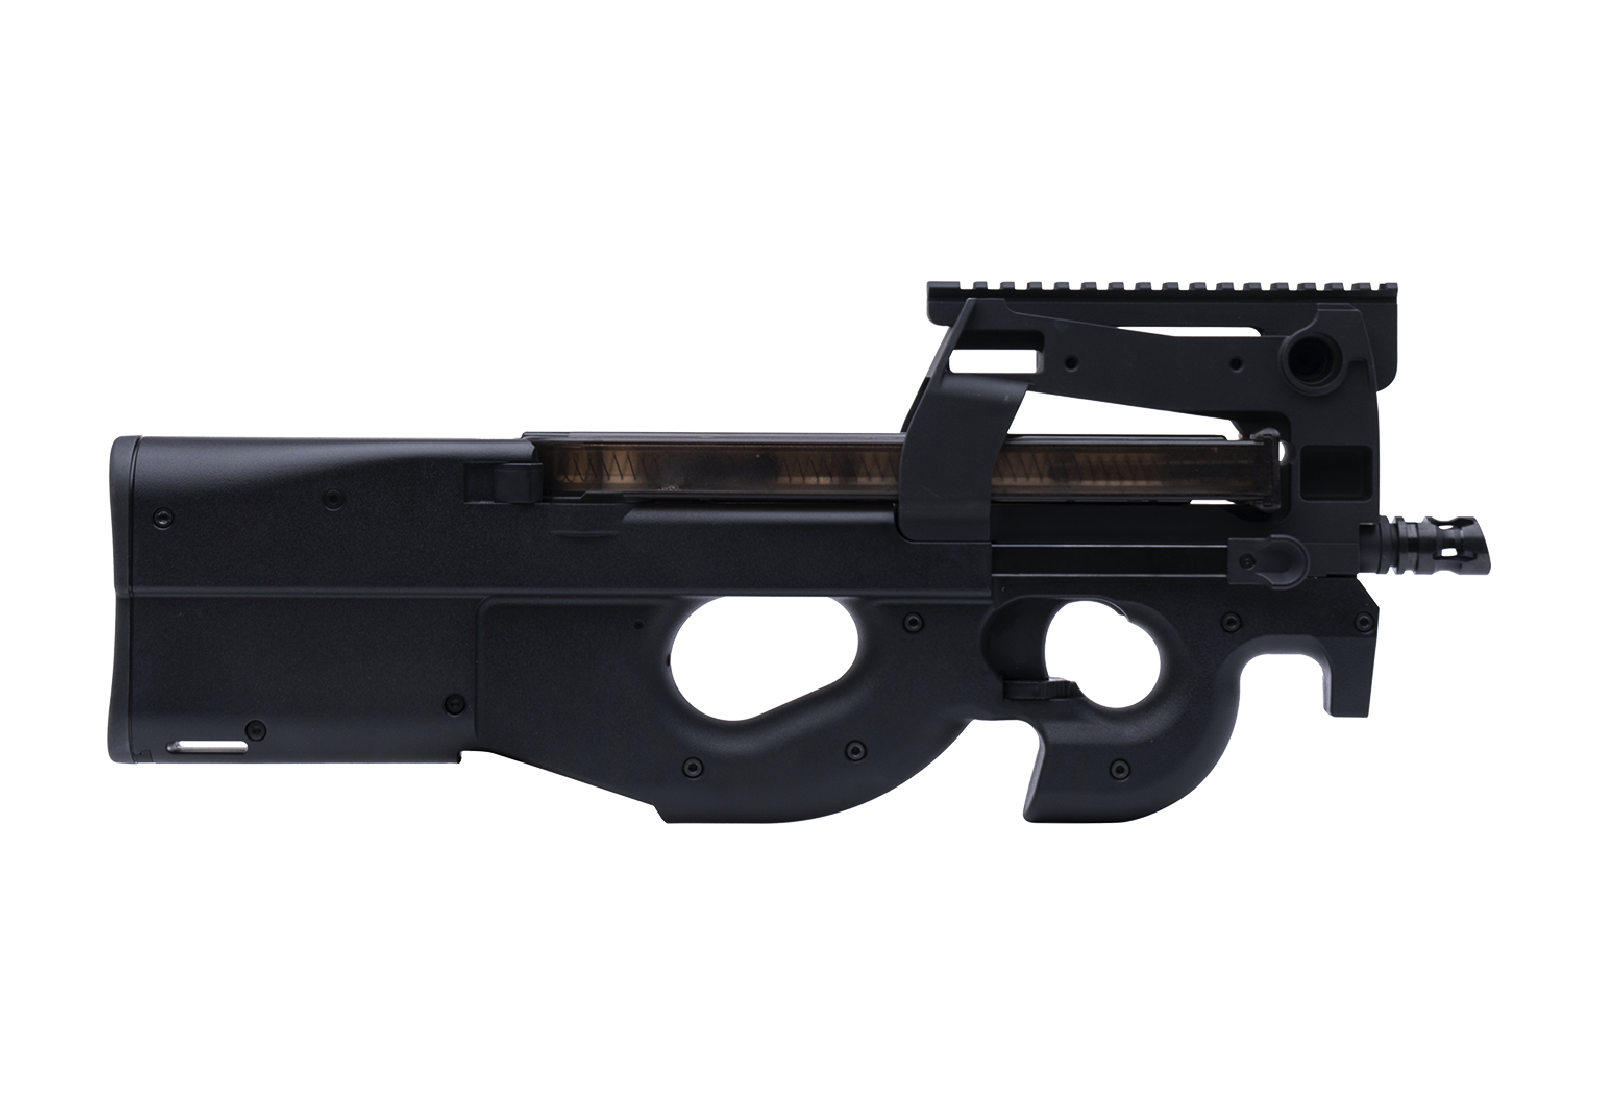 EMG FN P90 SMG : AEG / Black / 6mm / (UK)